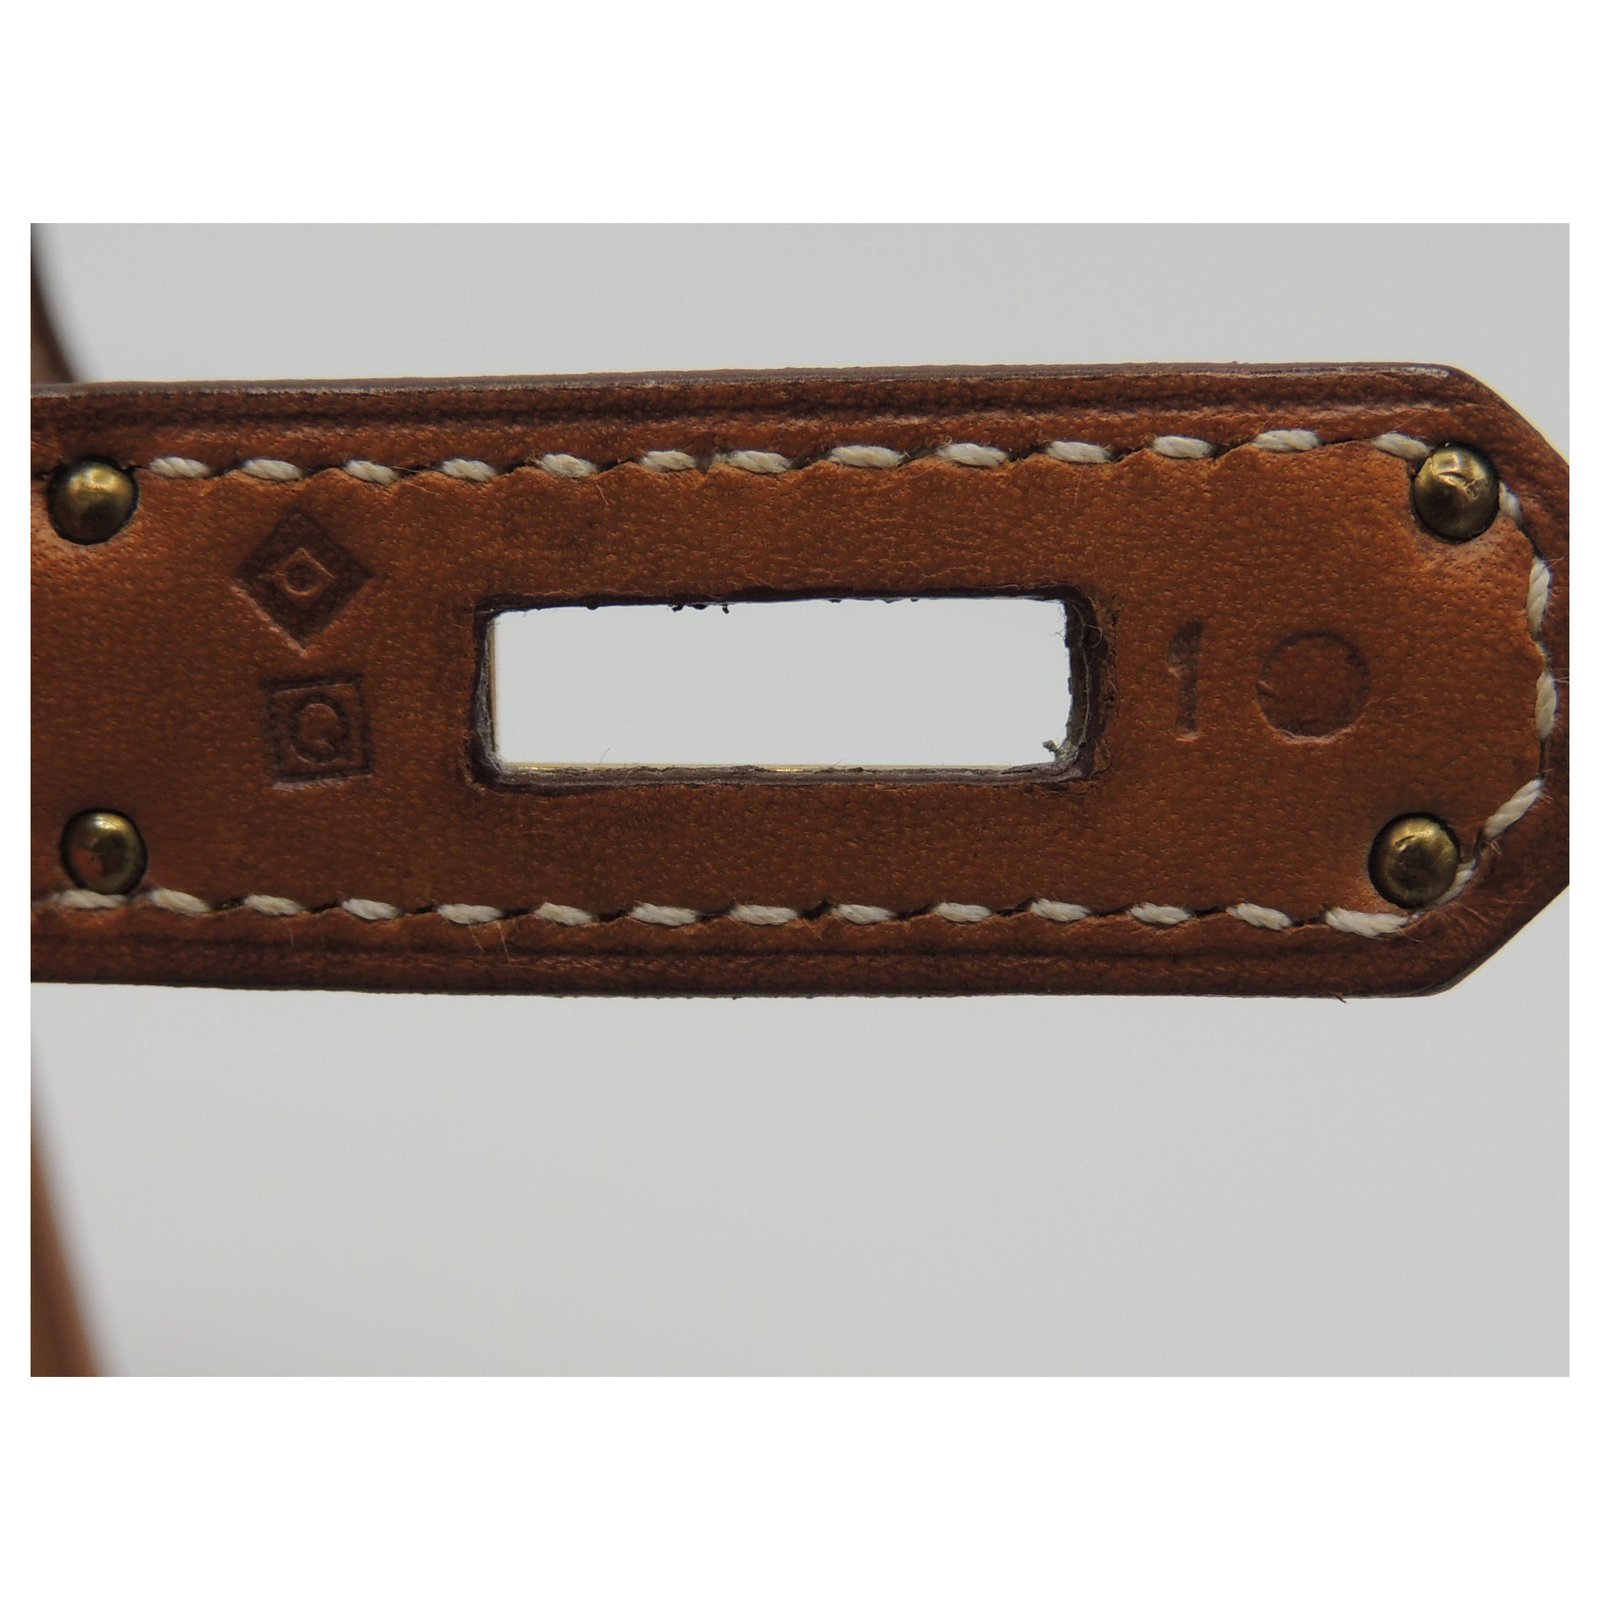 Hermes Special Order Horseshoe 40cm Fauve Barenia Leather Birkin, Lot  #58184